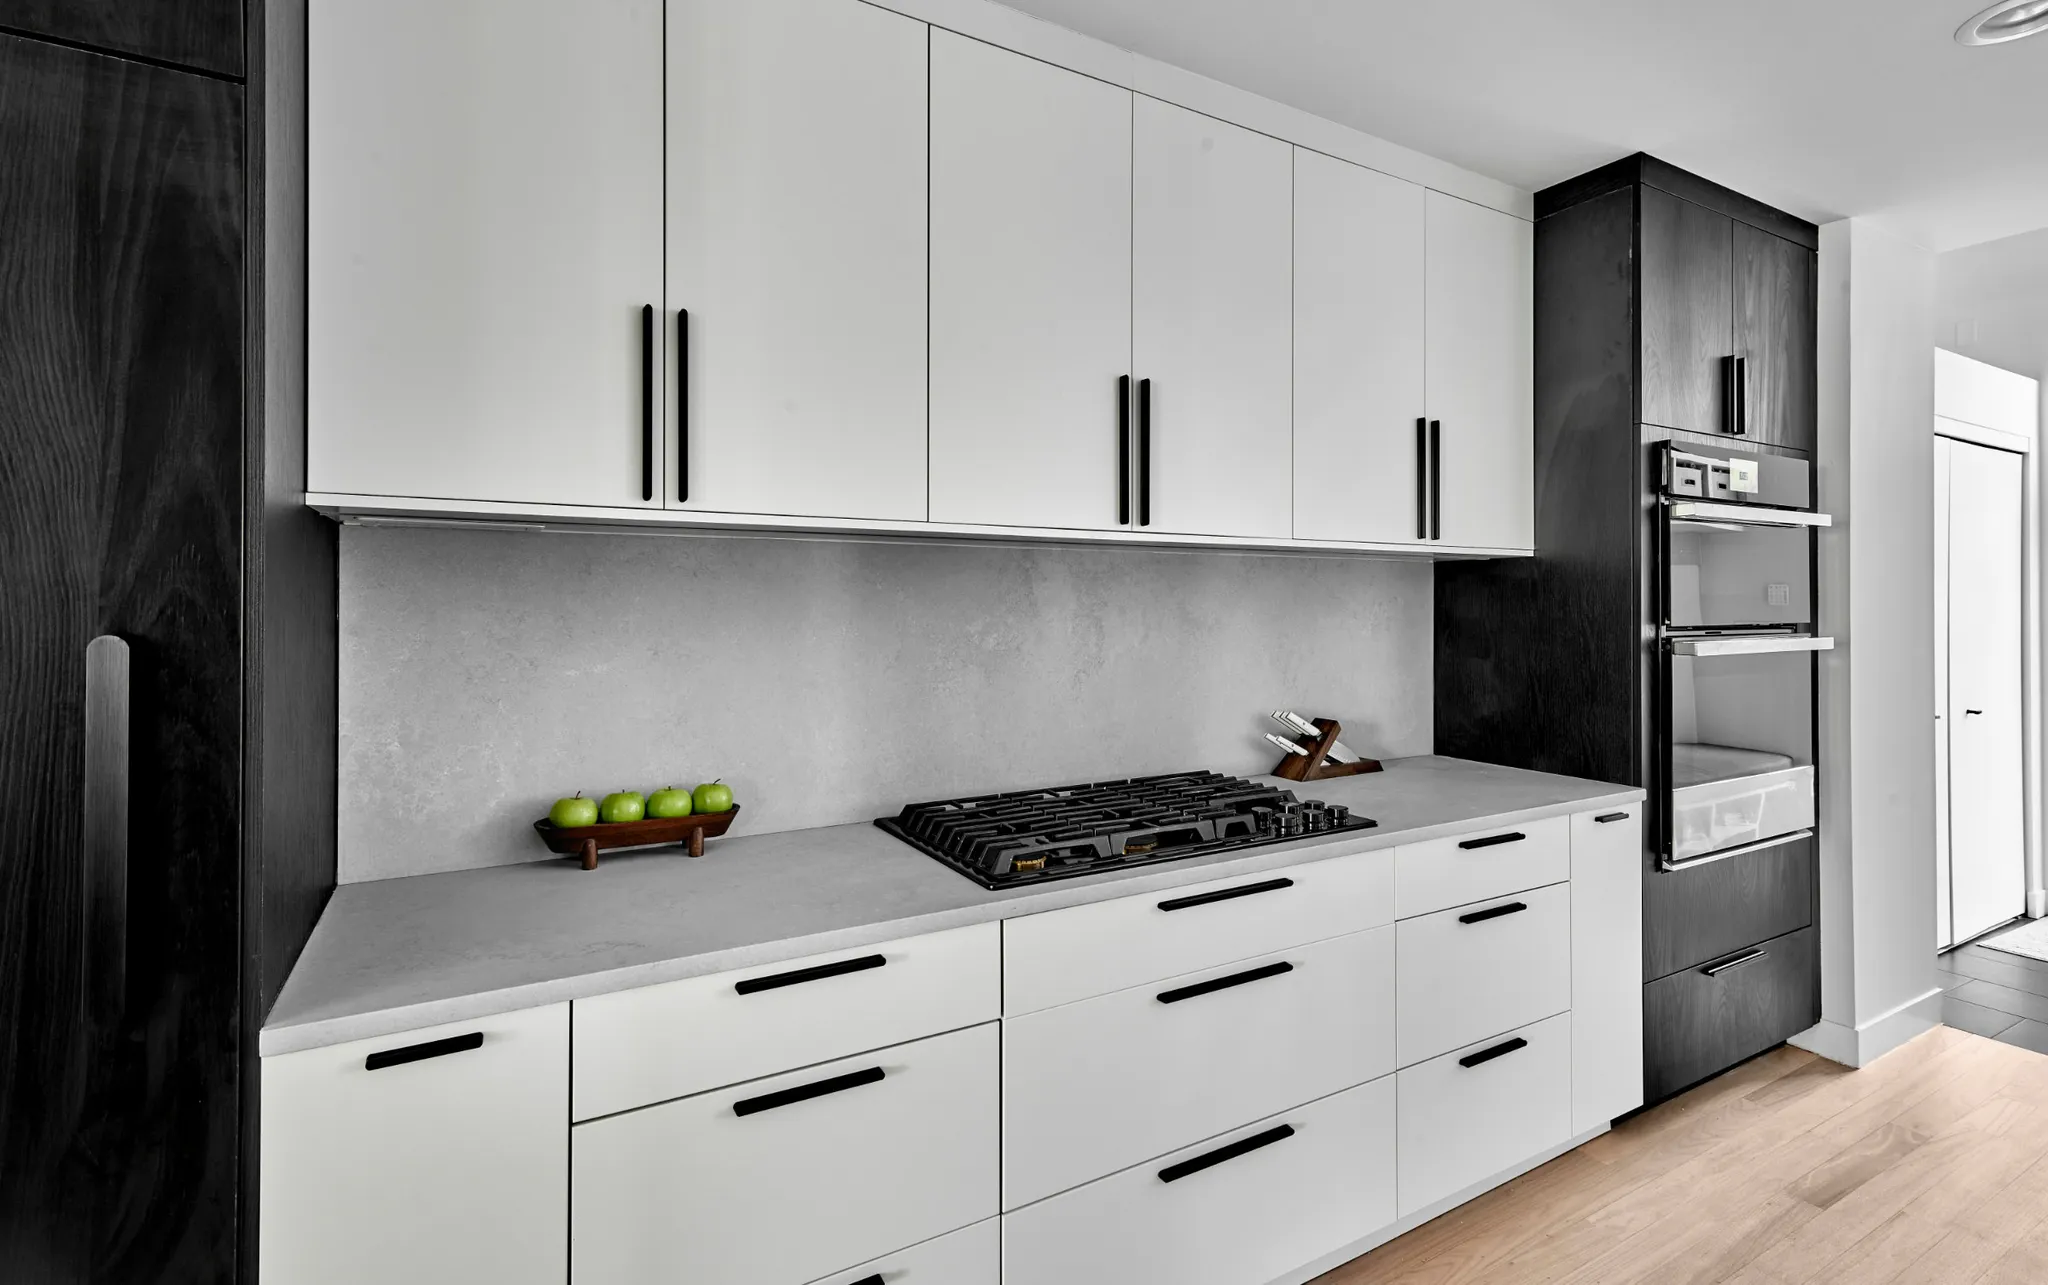 Flat white kitchen cabinets